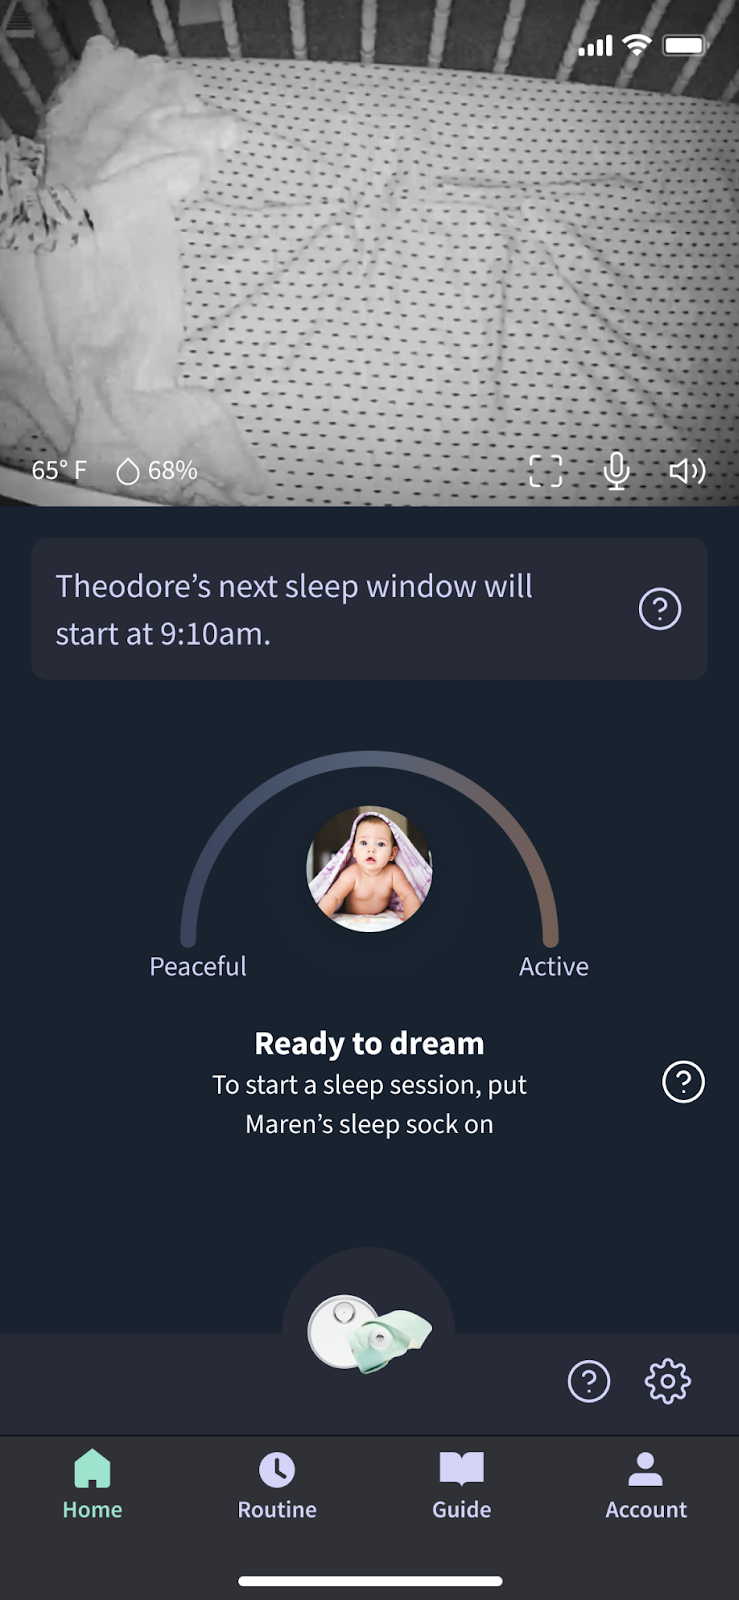 Theodore_s_next_sleep_window_will.png